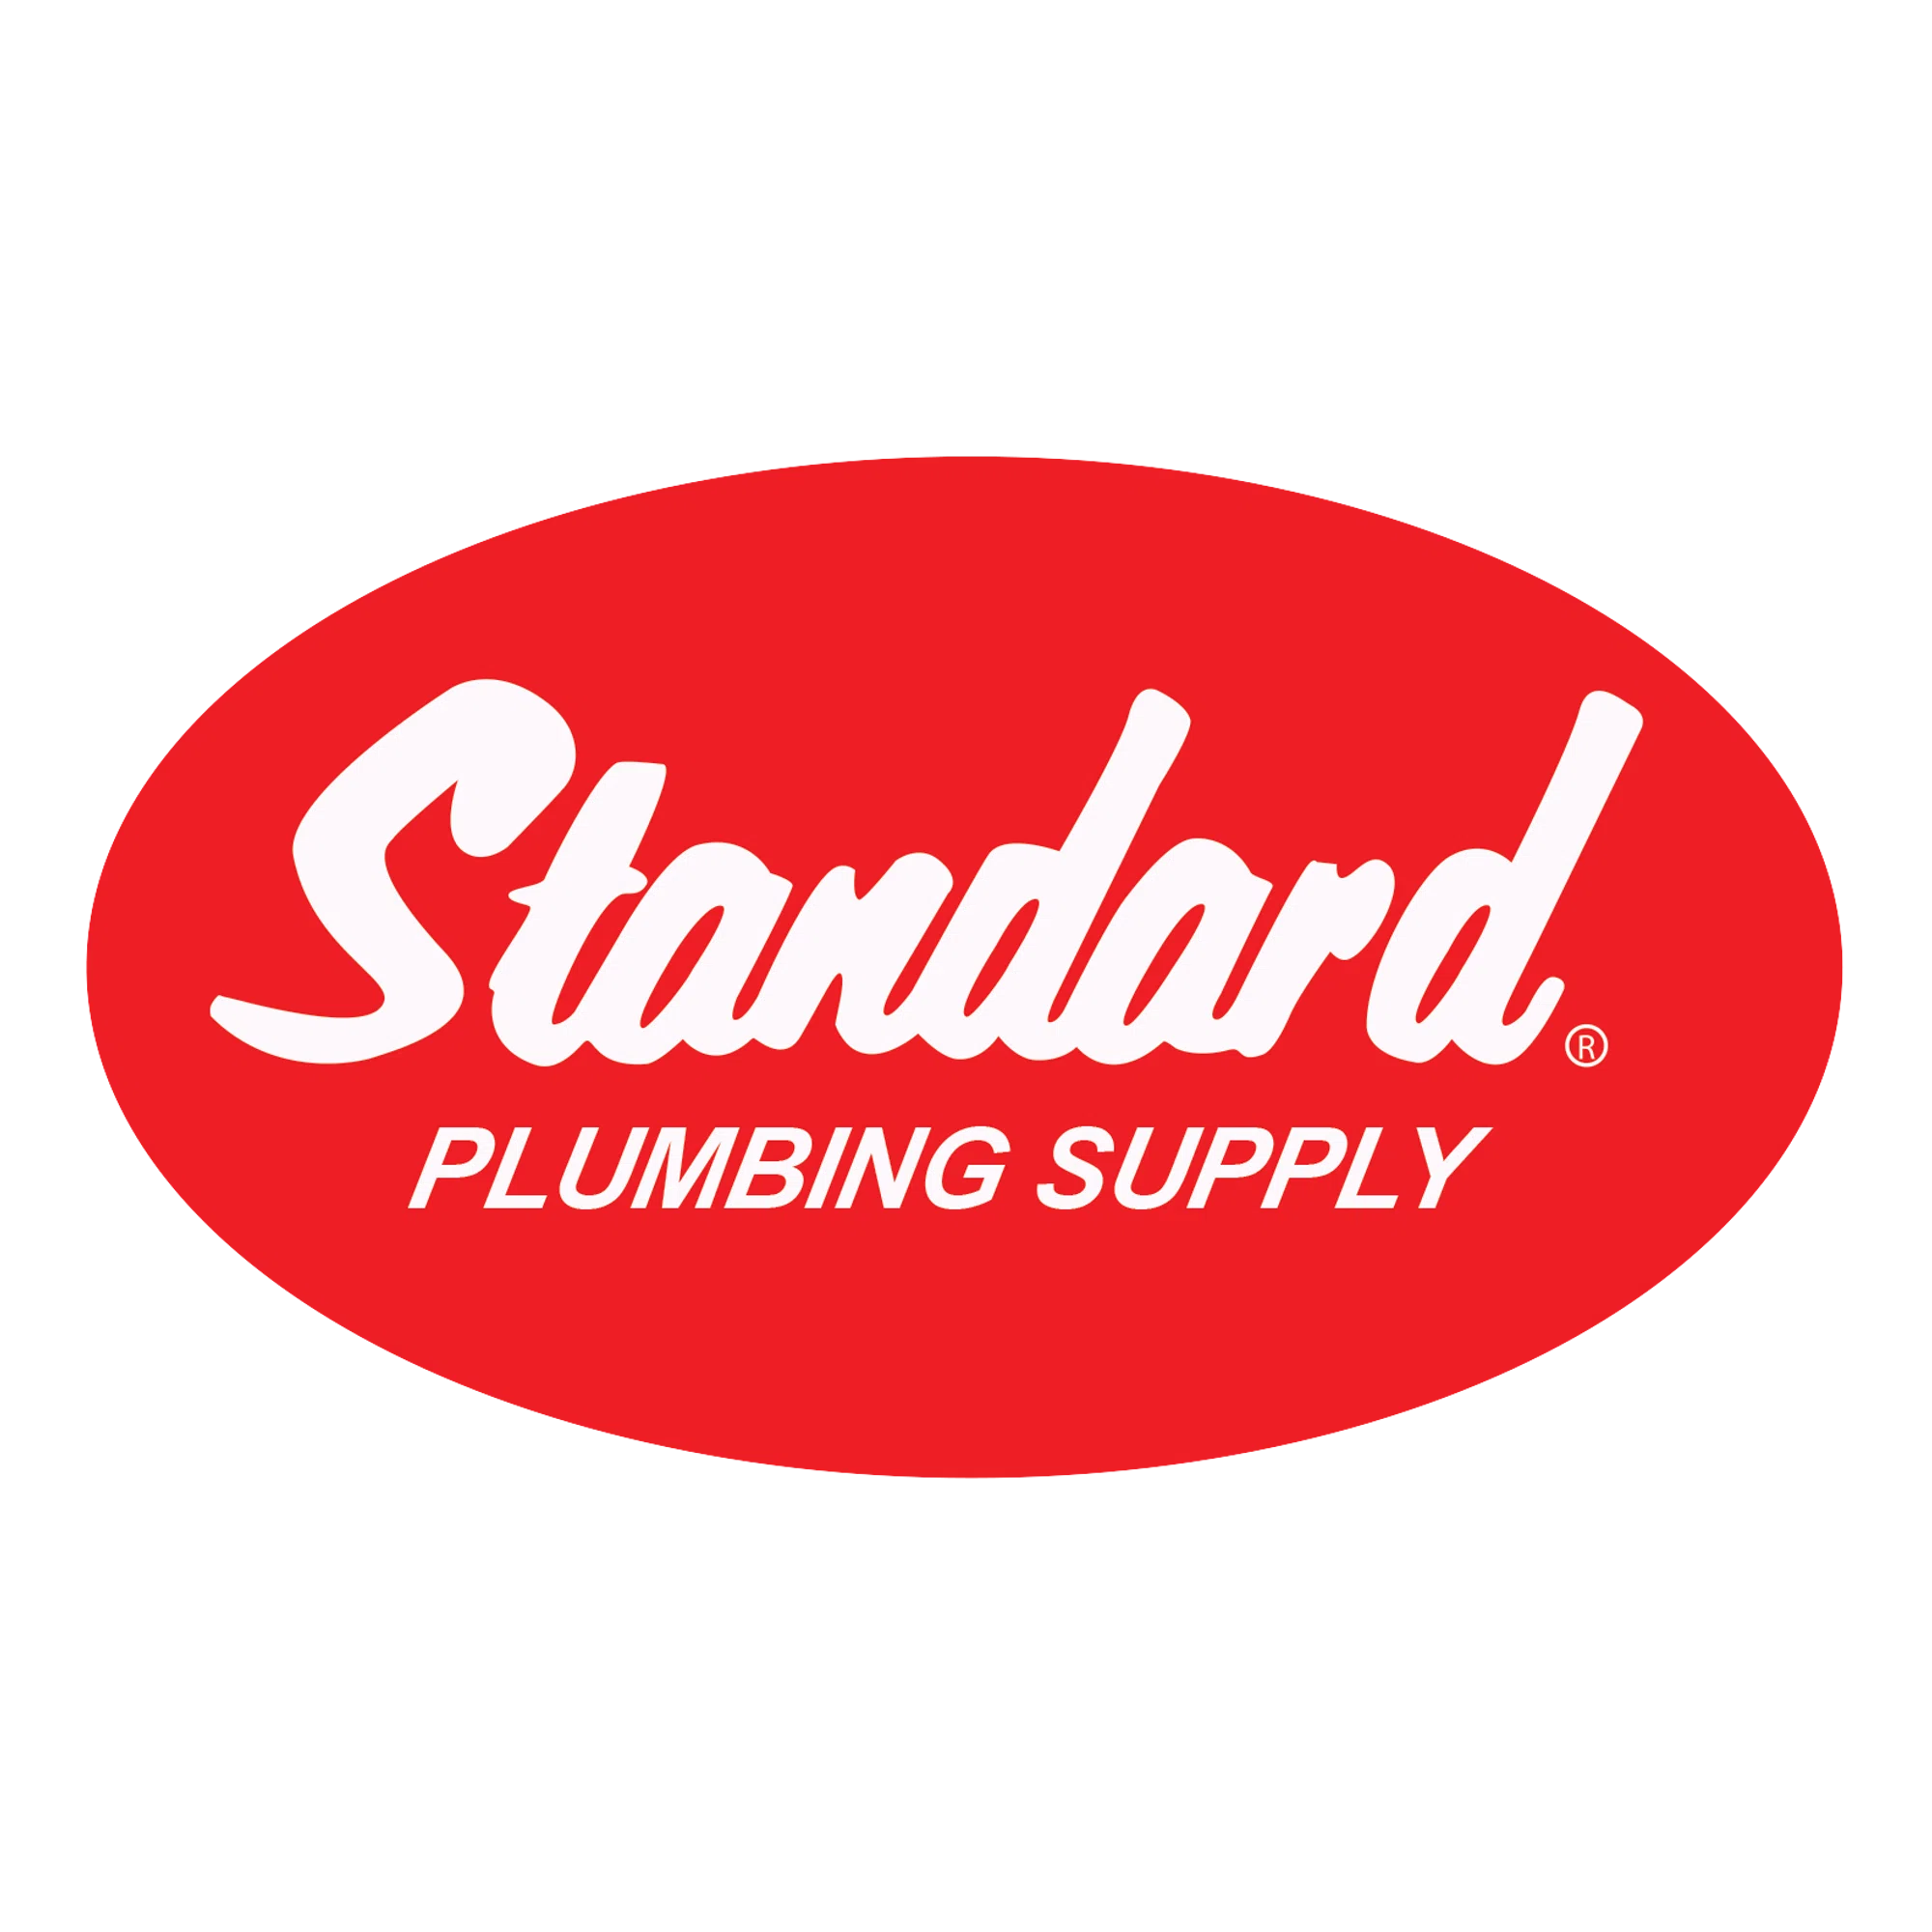 standardplumbing.com logo